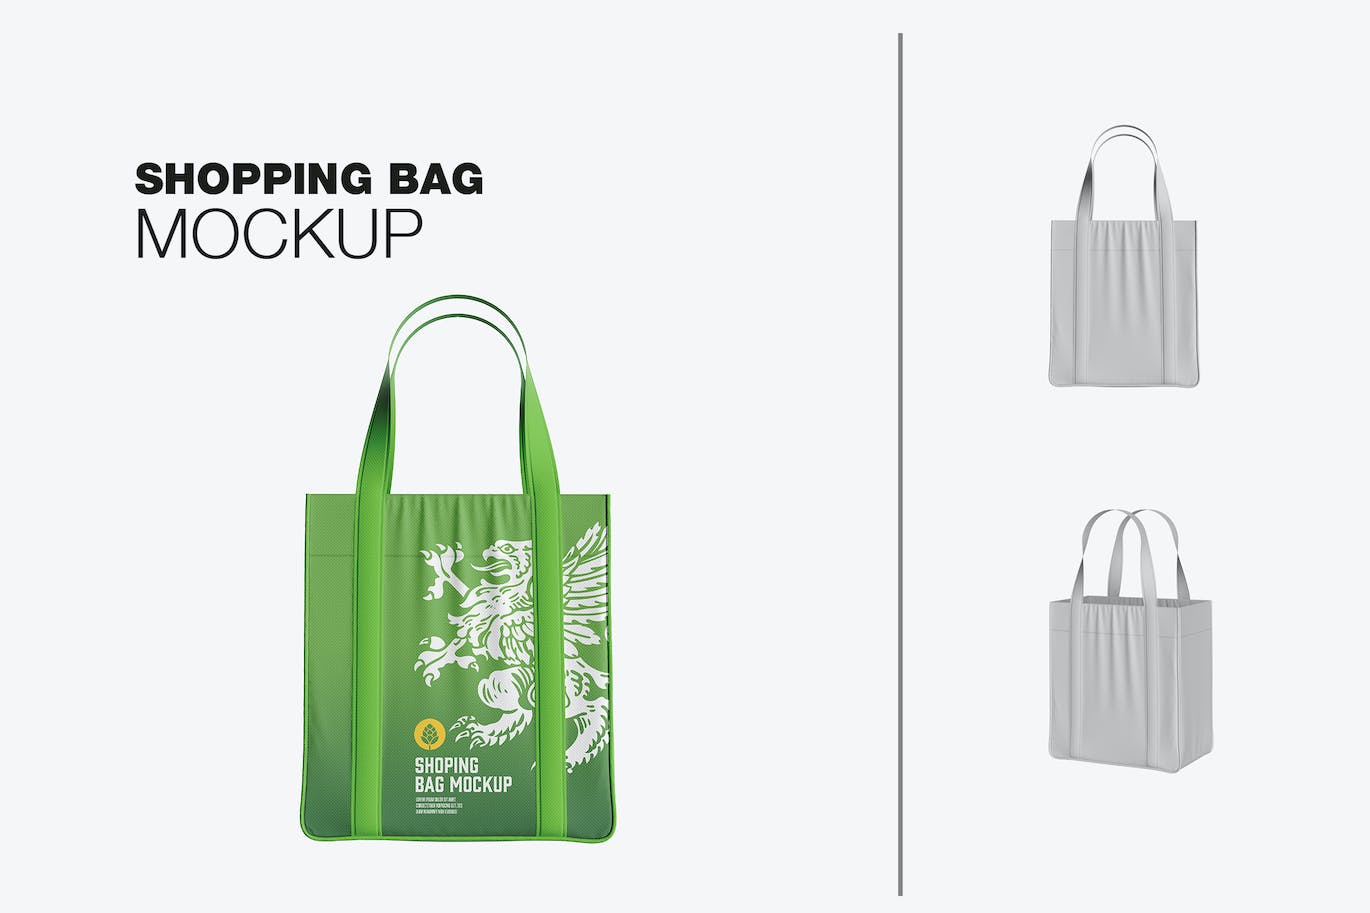 生态帆布袋包装Logo设计样机 Eco Canvas Bag Mockup 样机素材 第1张